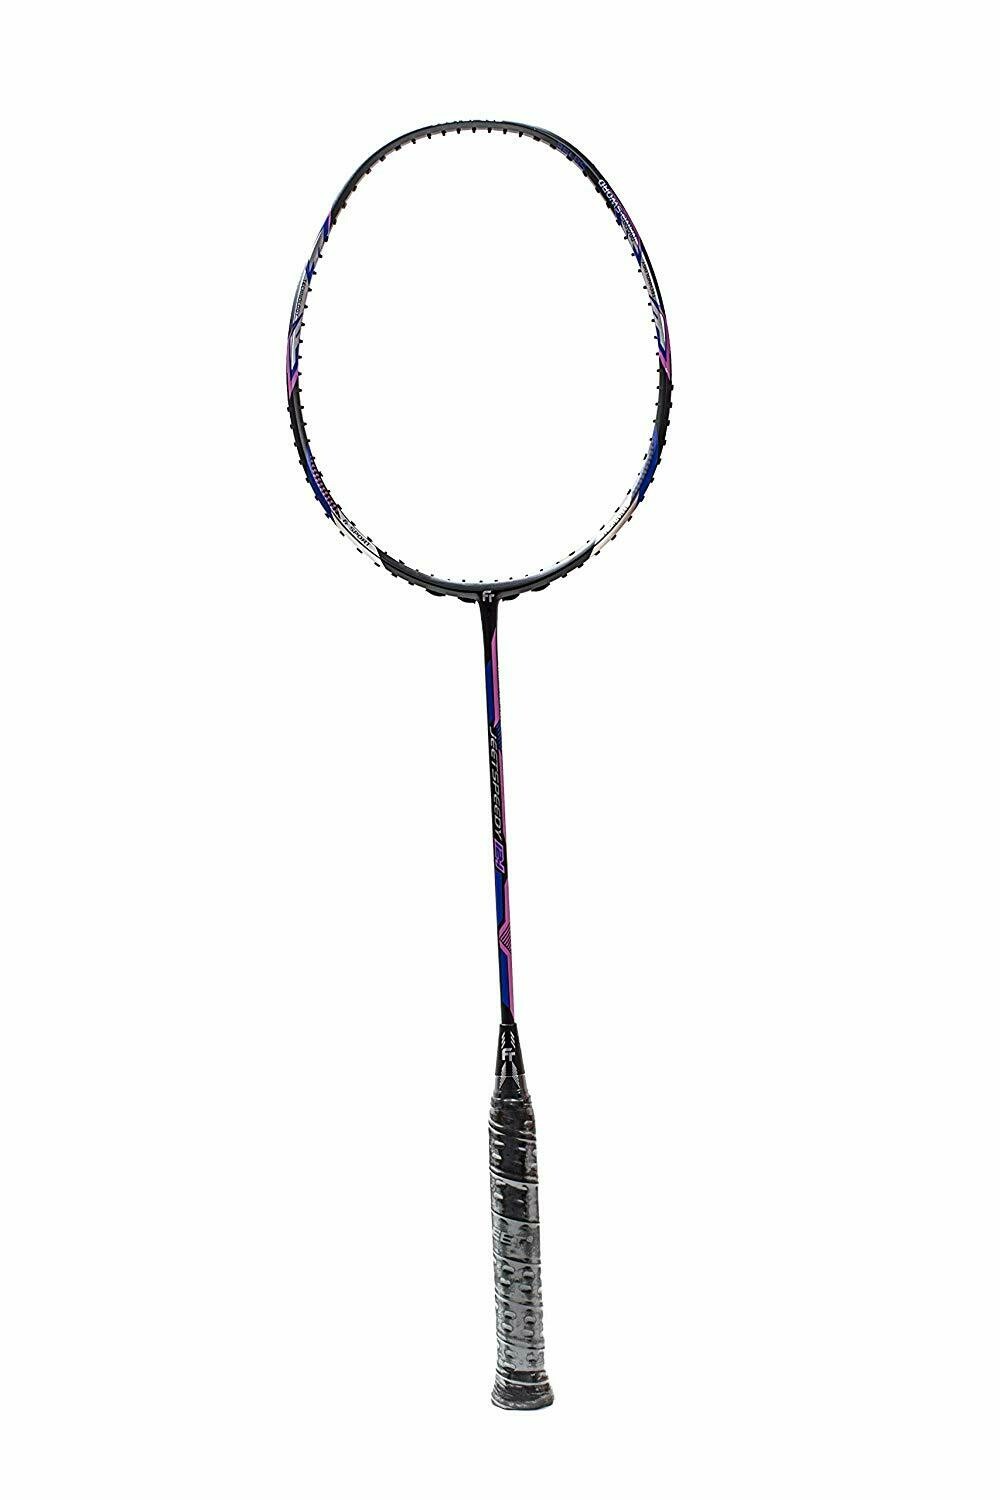 Fleet Jeetspeedy 12-I Badminton Racquet